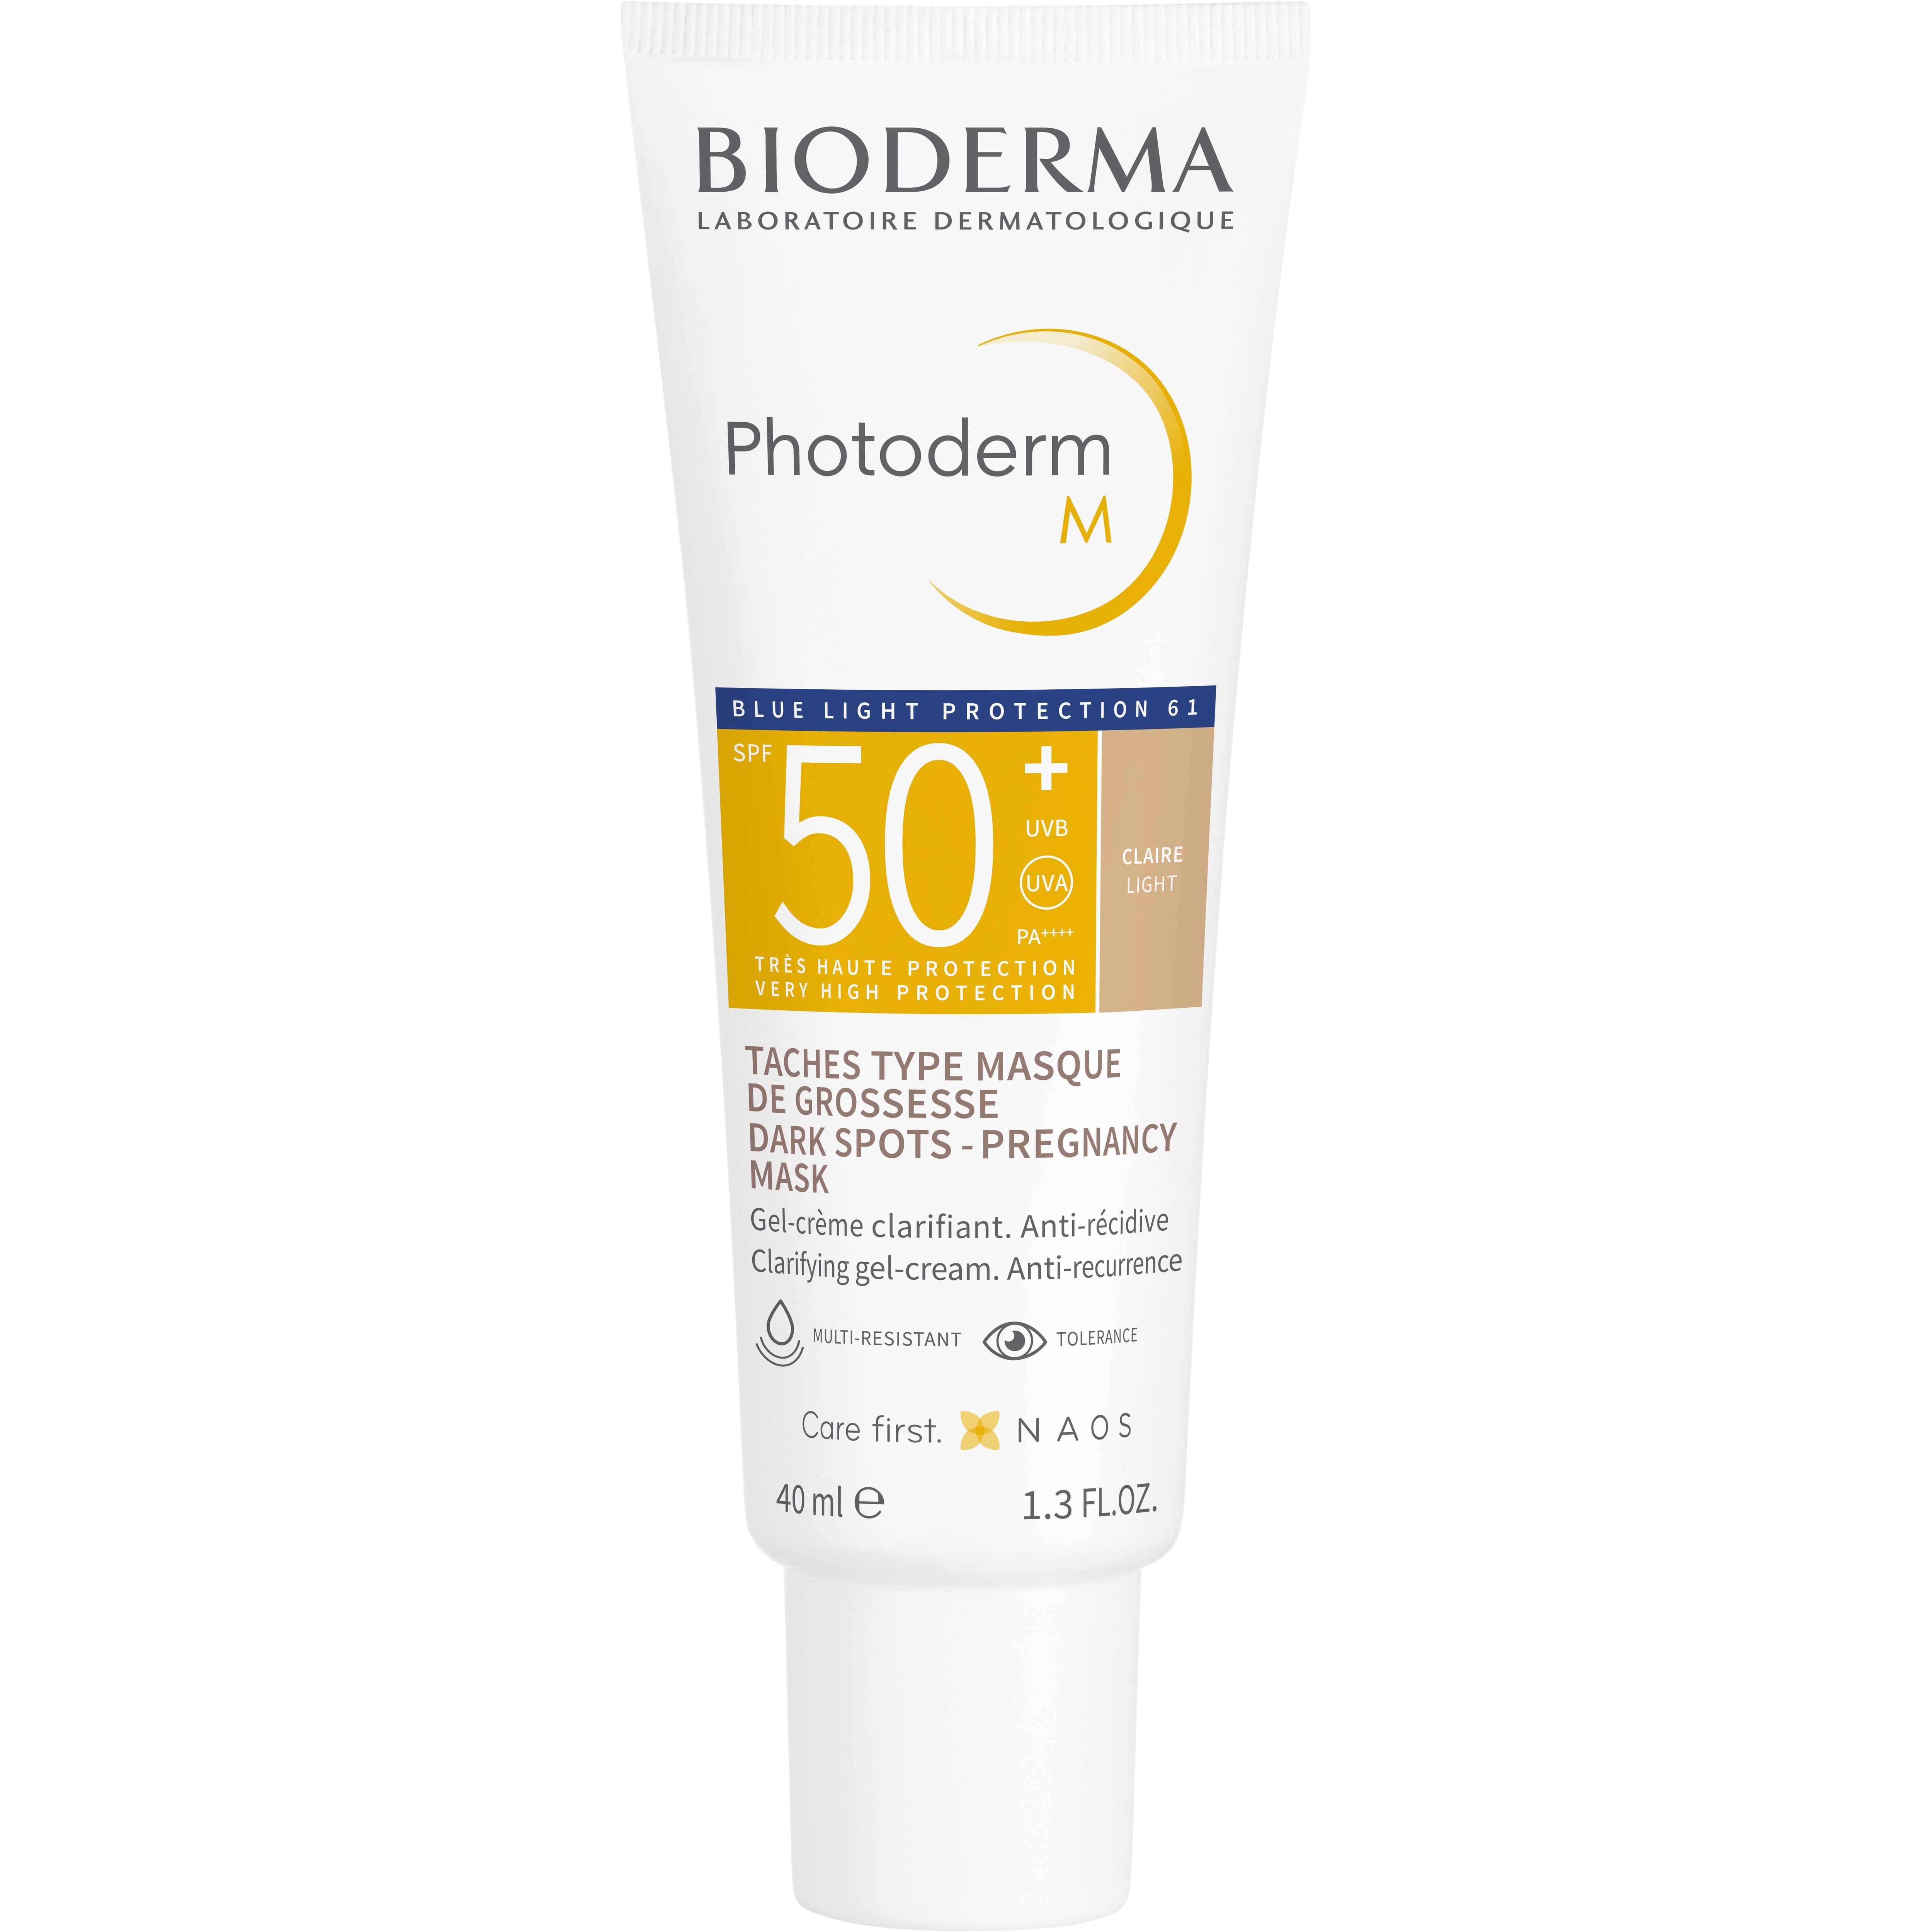 Солнцезащитный крем-гель Bioderma Photoderm Blue Light Protection 61 SPF50+ 40 мл - фото 1